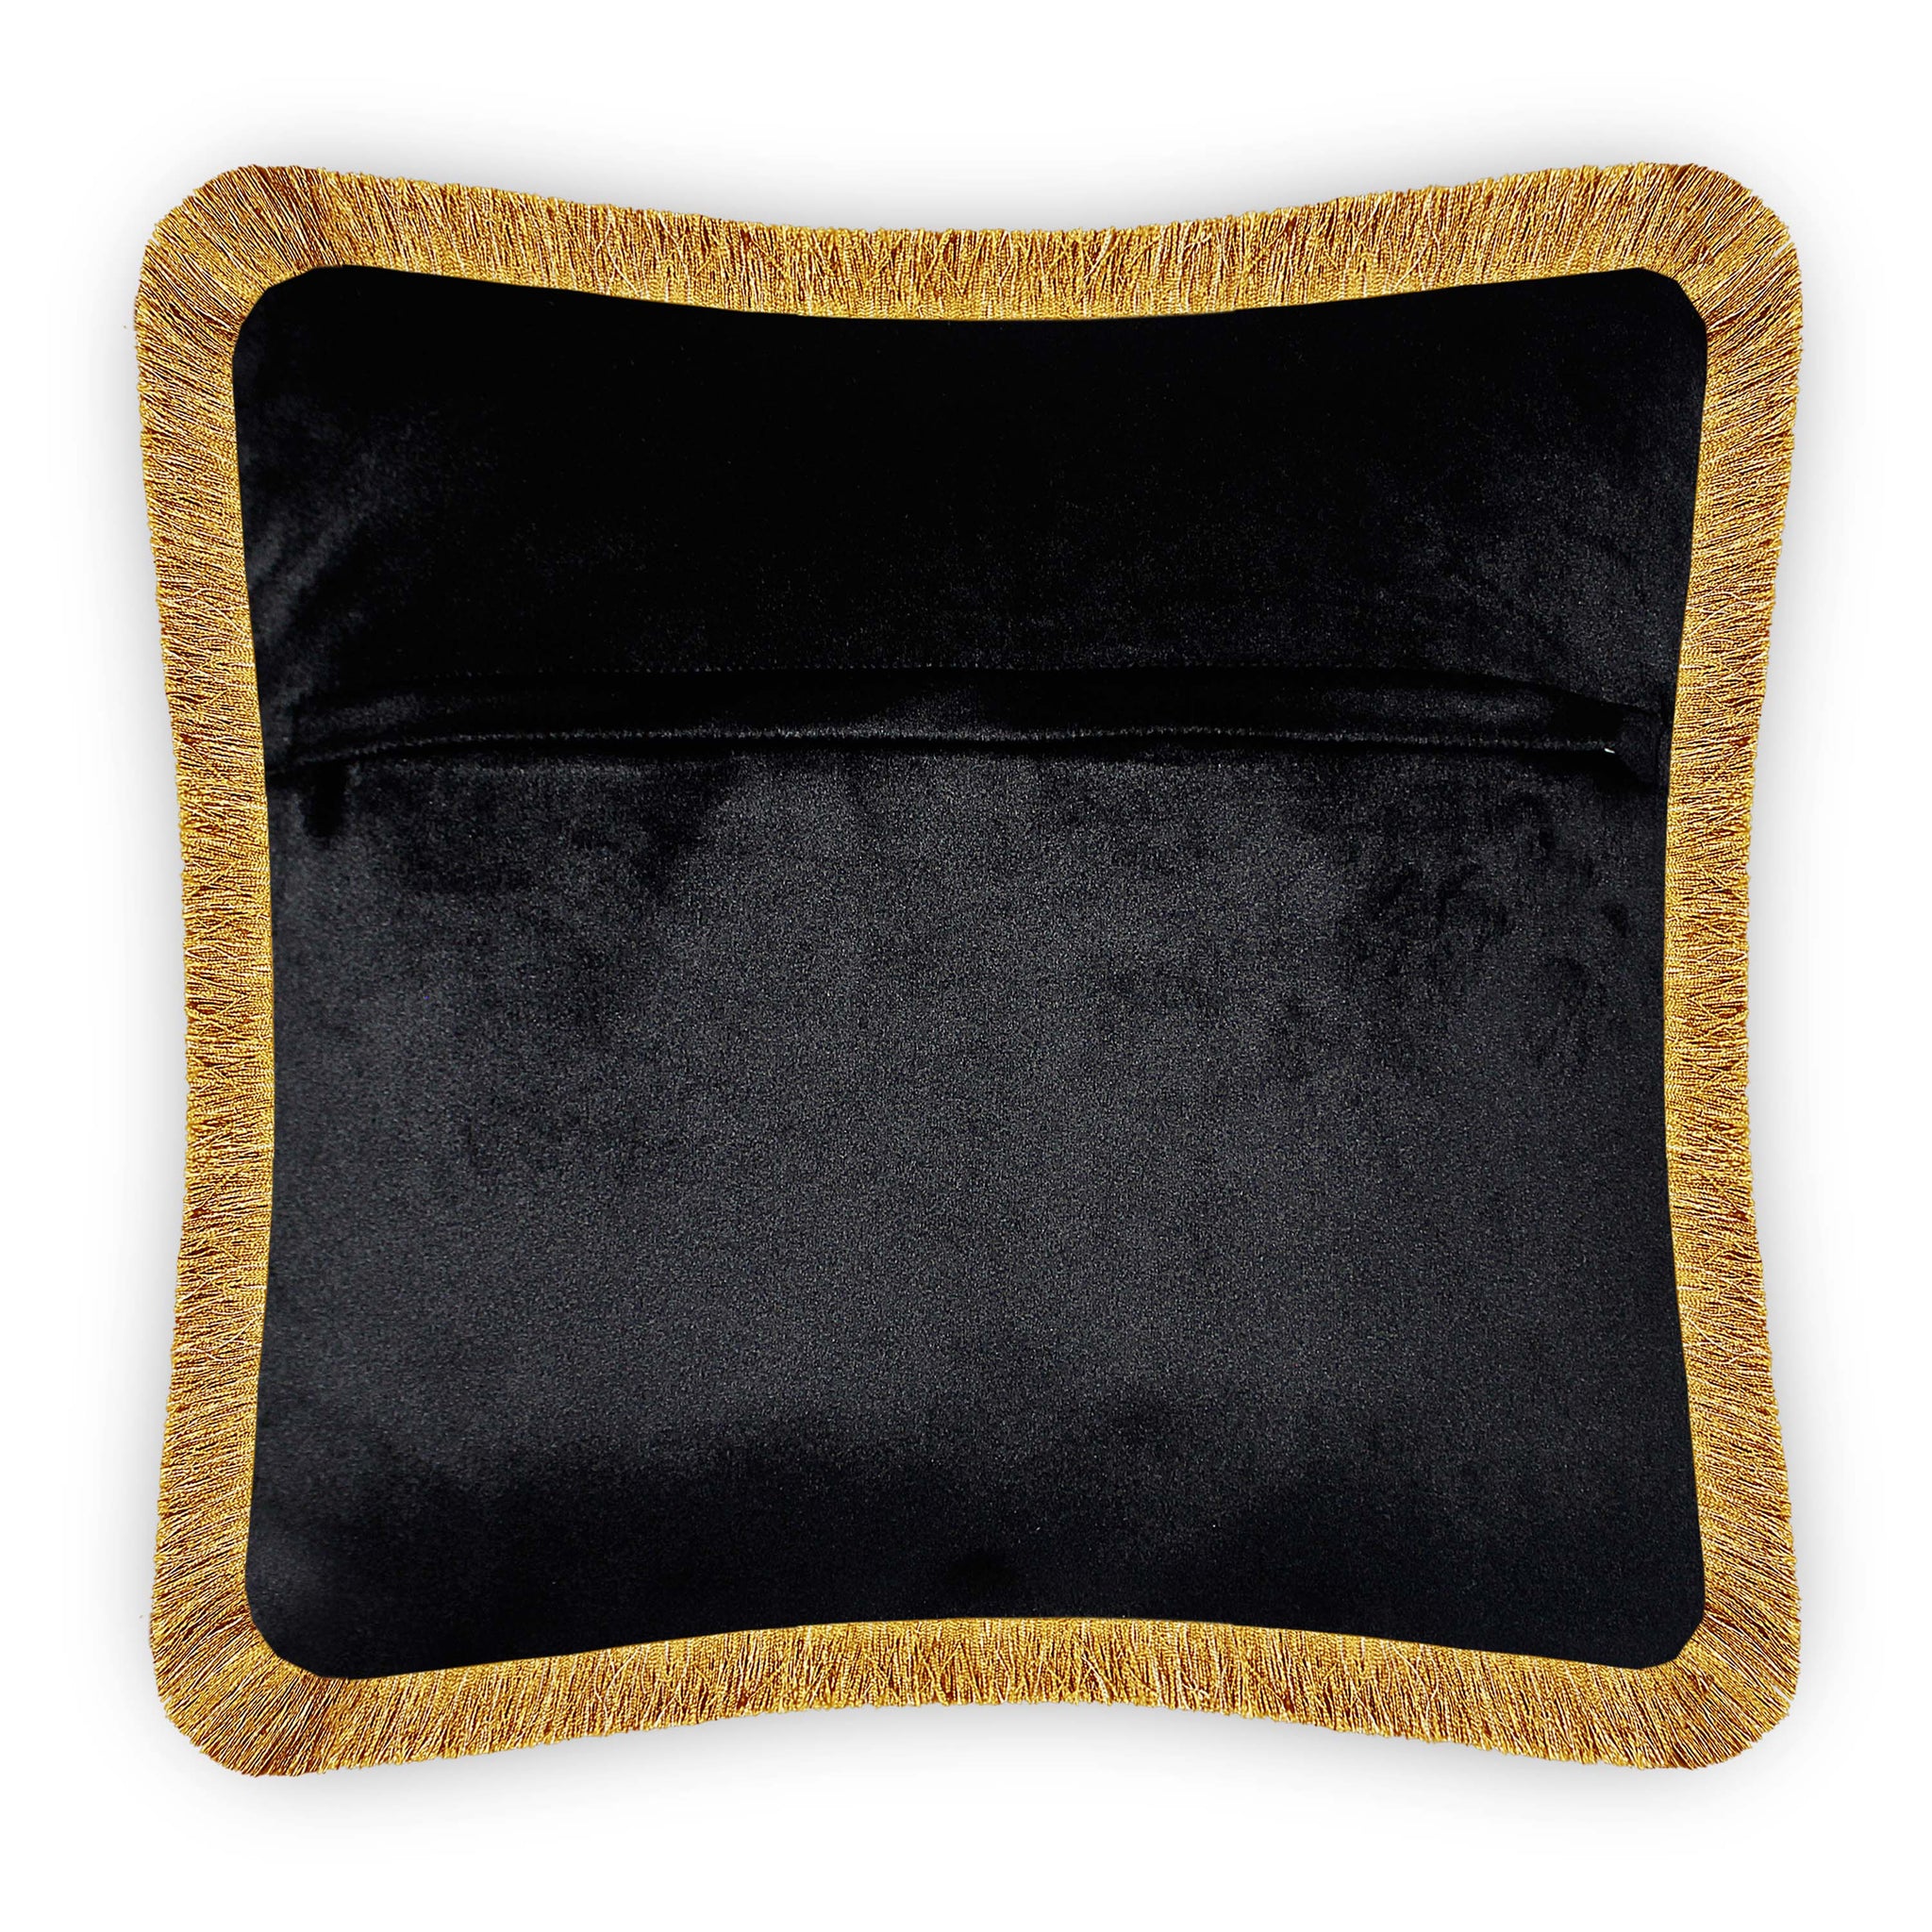 Black Velvet Cushion Cover Ethnic Thailand Geometric Decorative Pillowcase Modern Home Décor Throw Pillow for Sofa Chair Couch Bedroom 45x45 cm 18x18 In